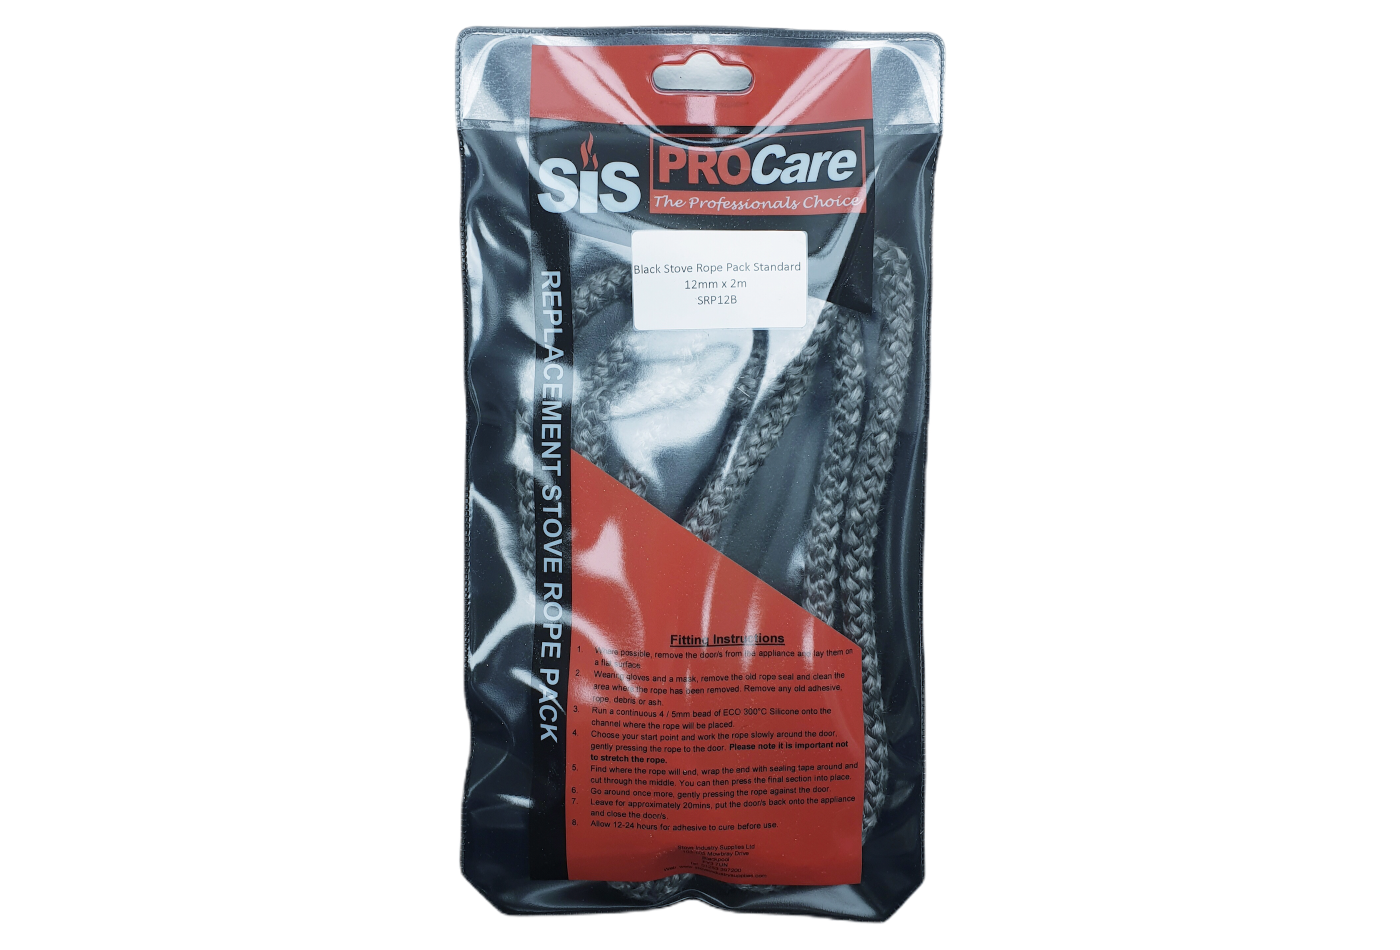 SiS Procare Black 12 milimetre x 2 metre Standard Stove Rope Pack - product code SRP12B